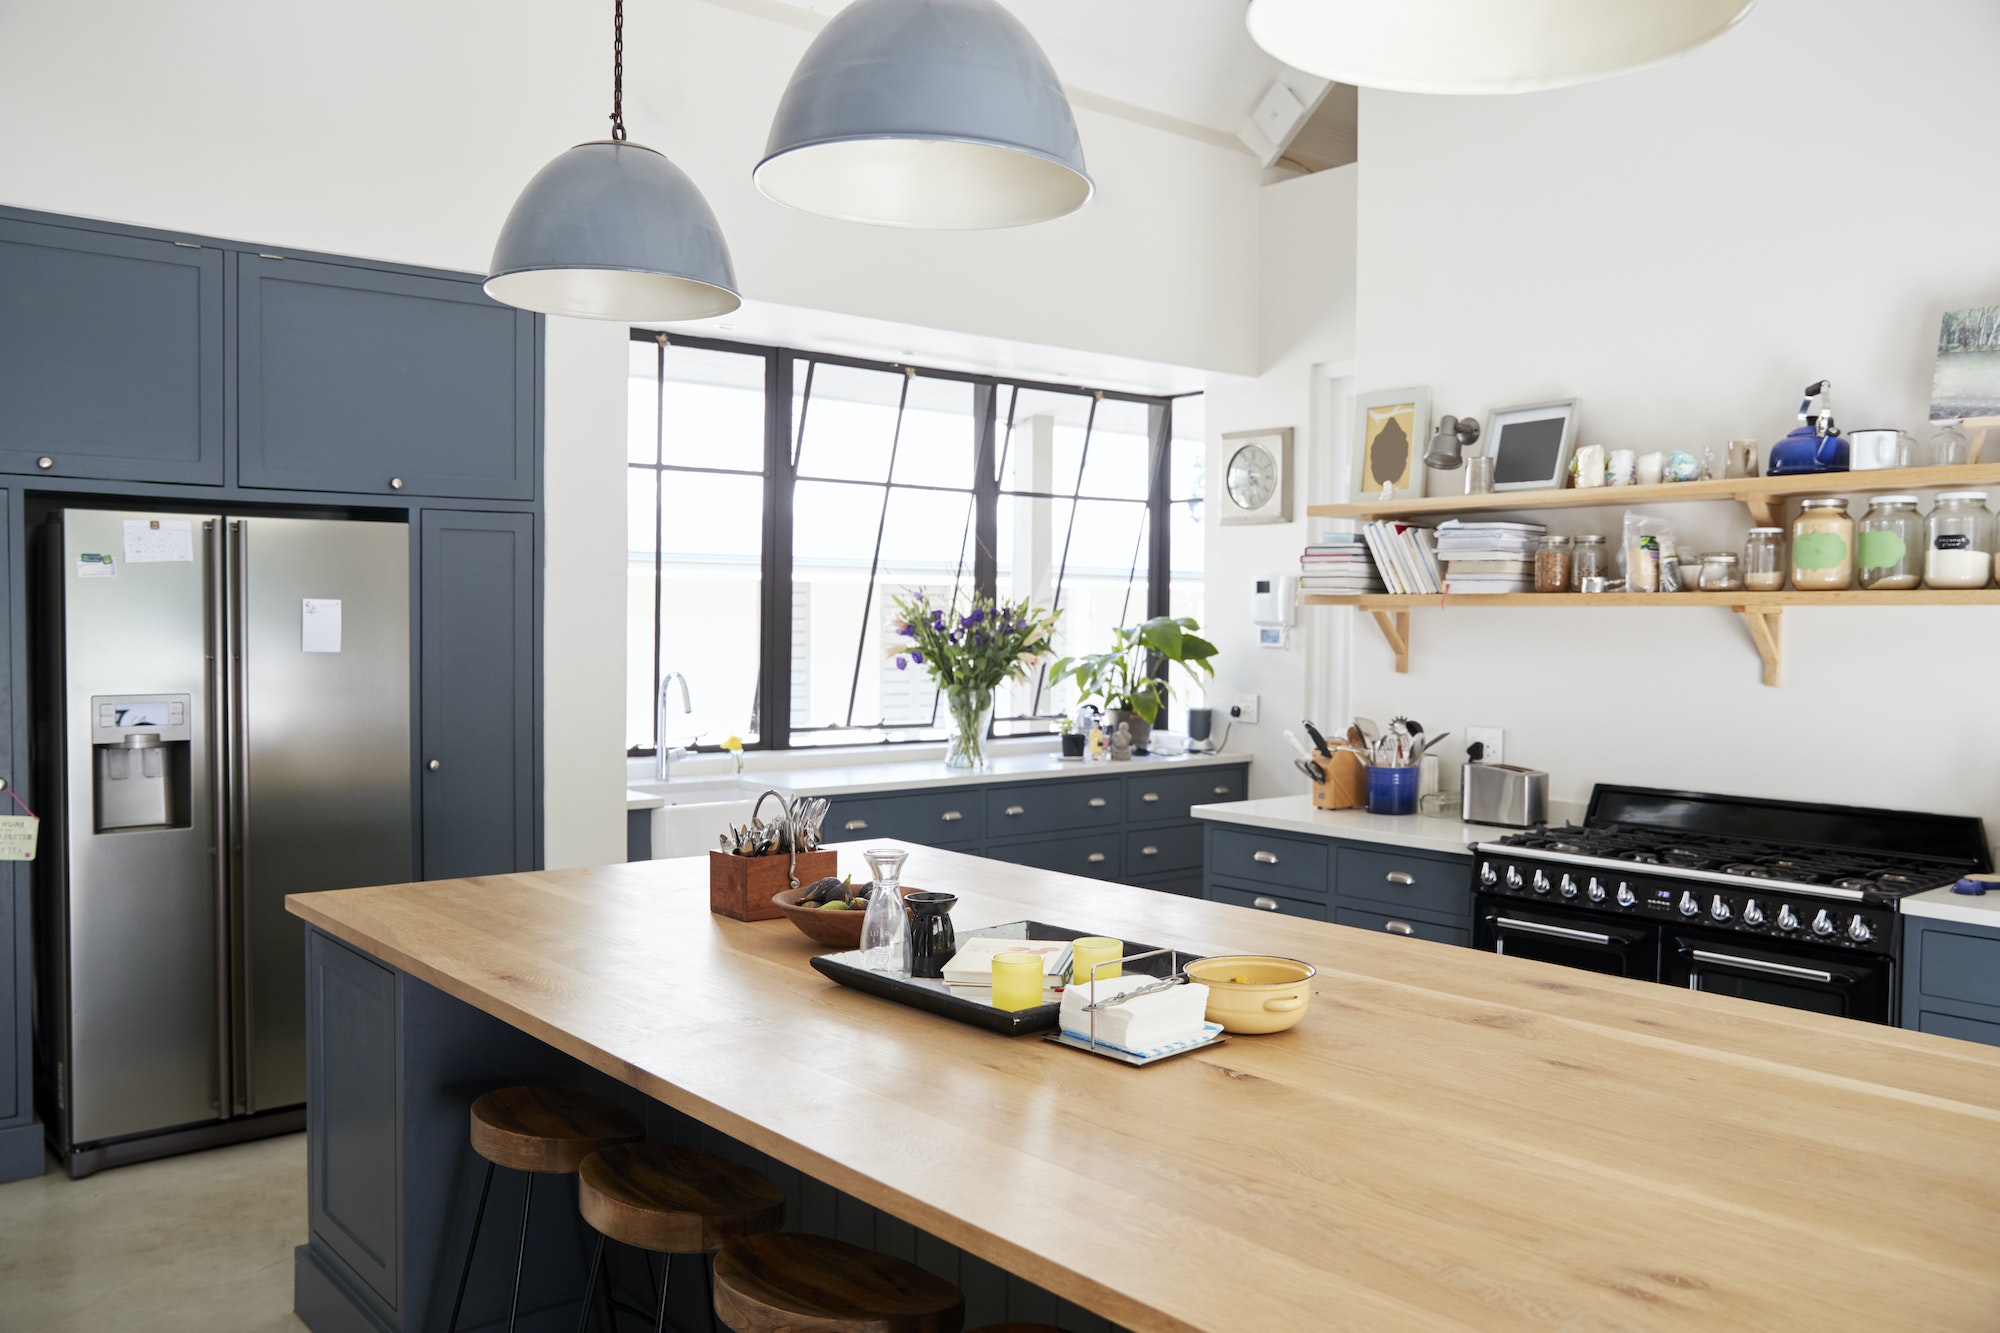 10 Stylish Modern Kitchen Design Ideas with Large Windows to Enjoy The Beautiful Views